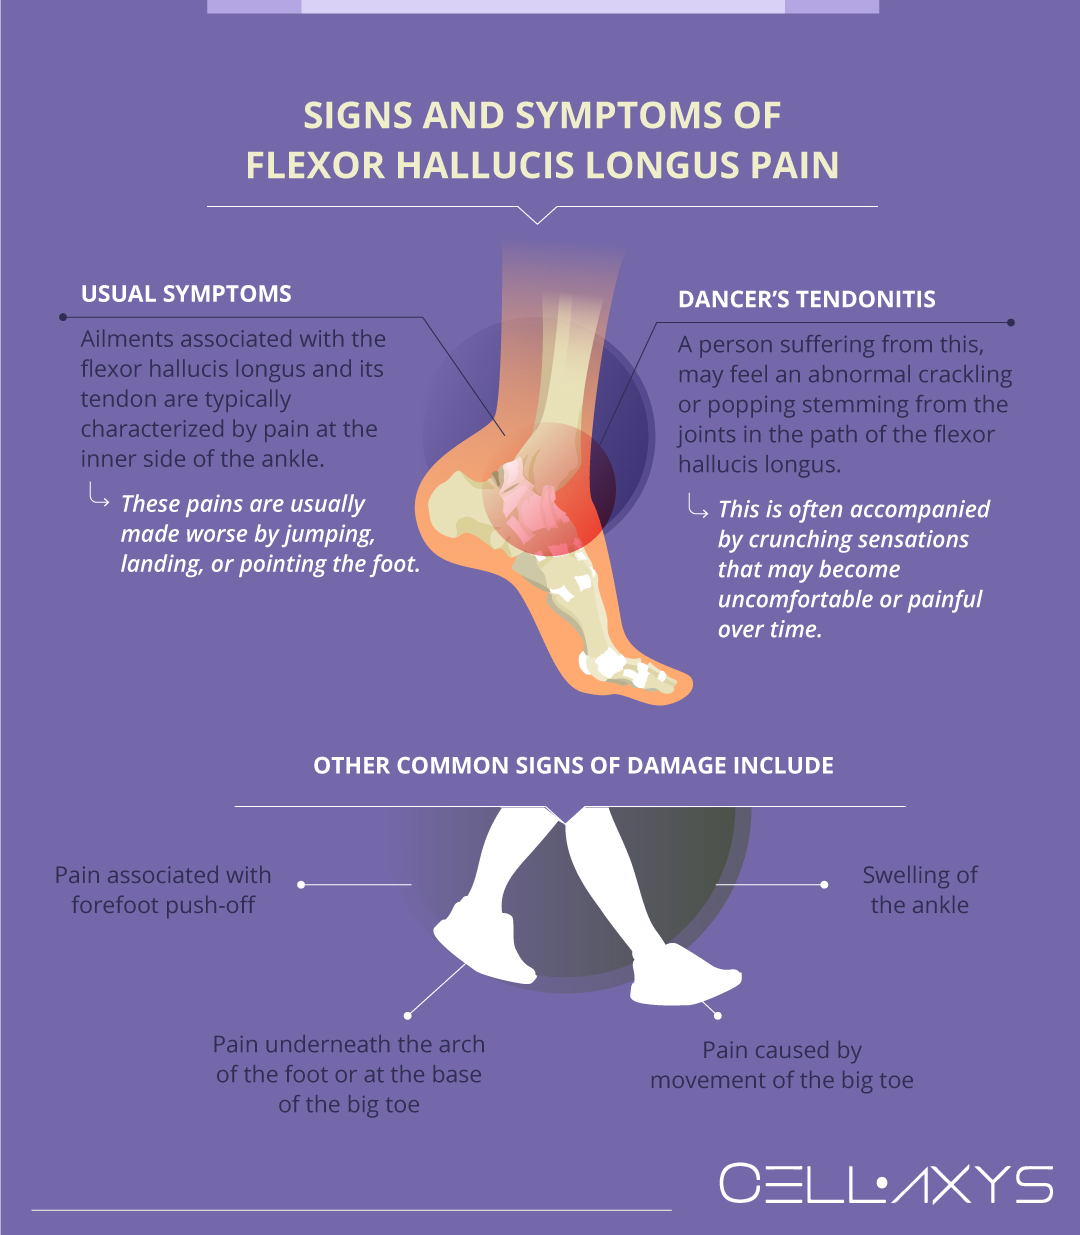 Signs and Symptoms of Flexor Hallucis Longus Pain